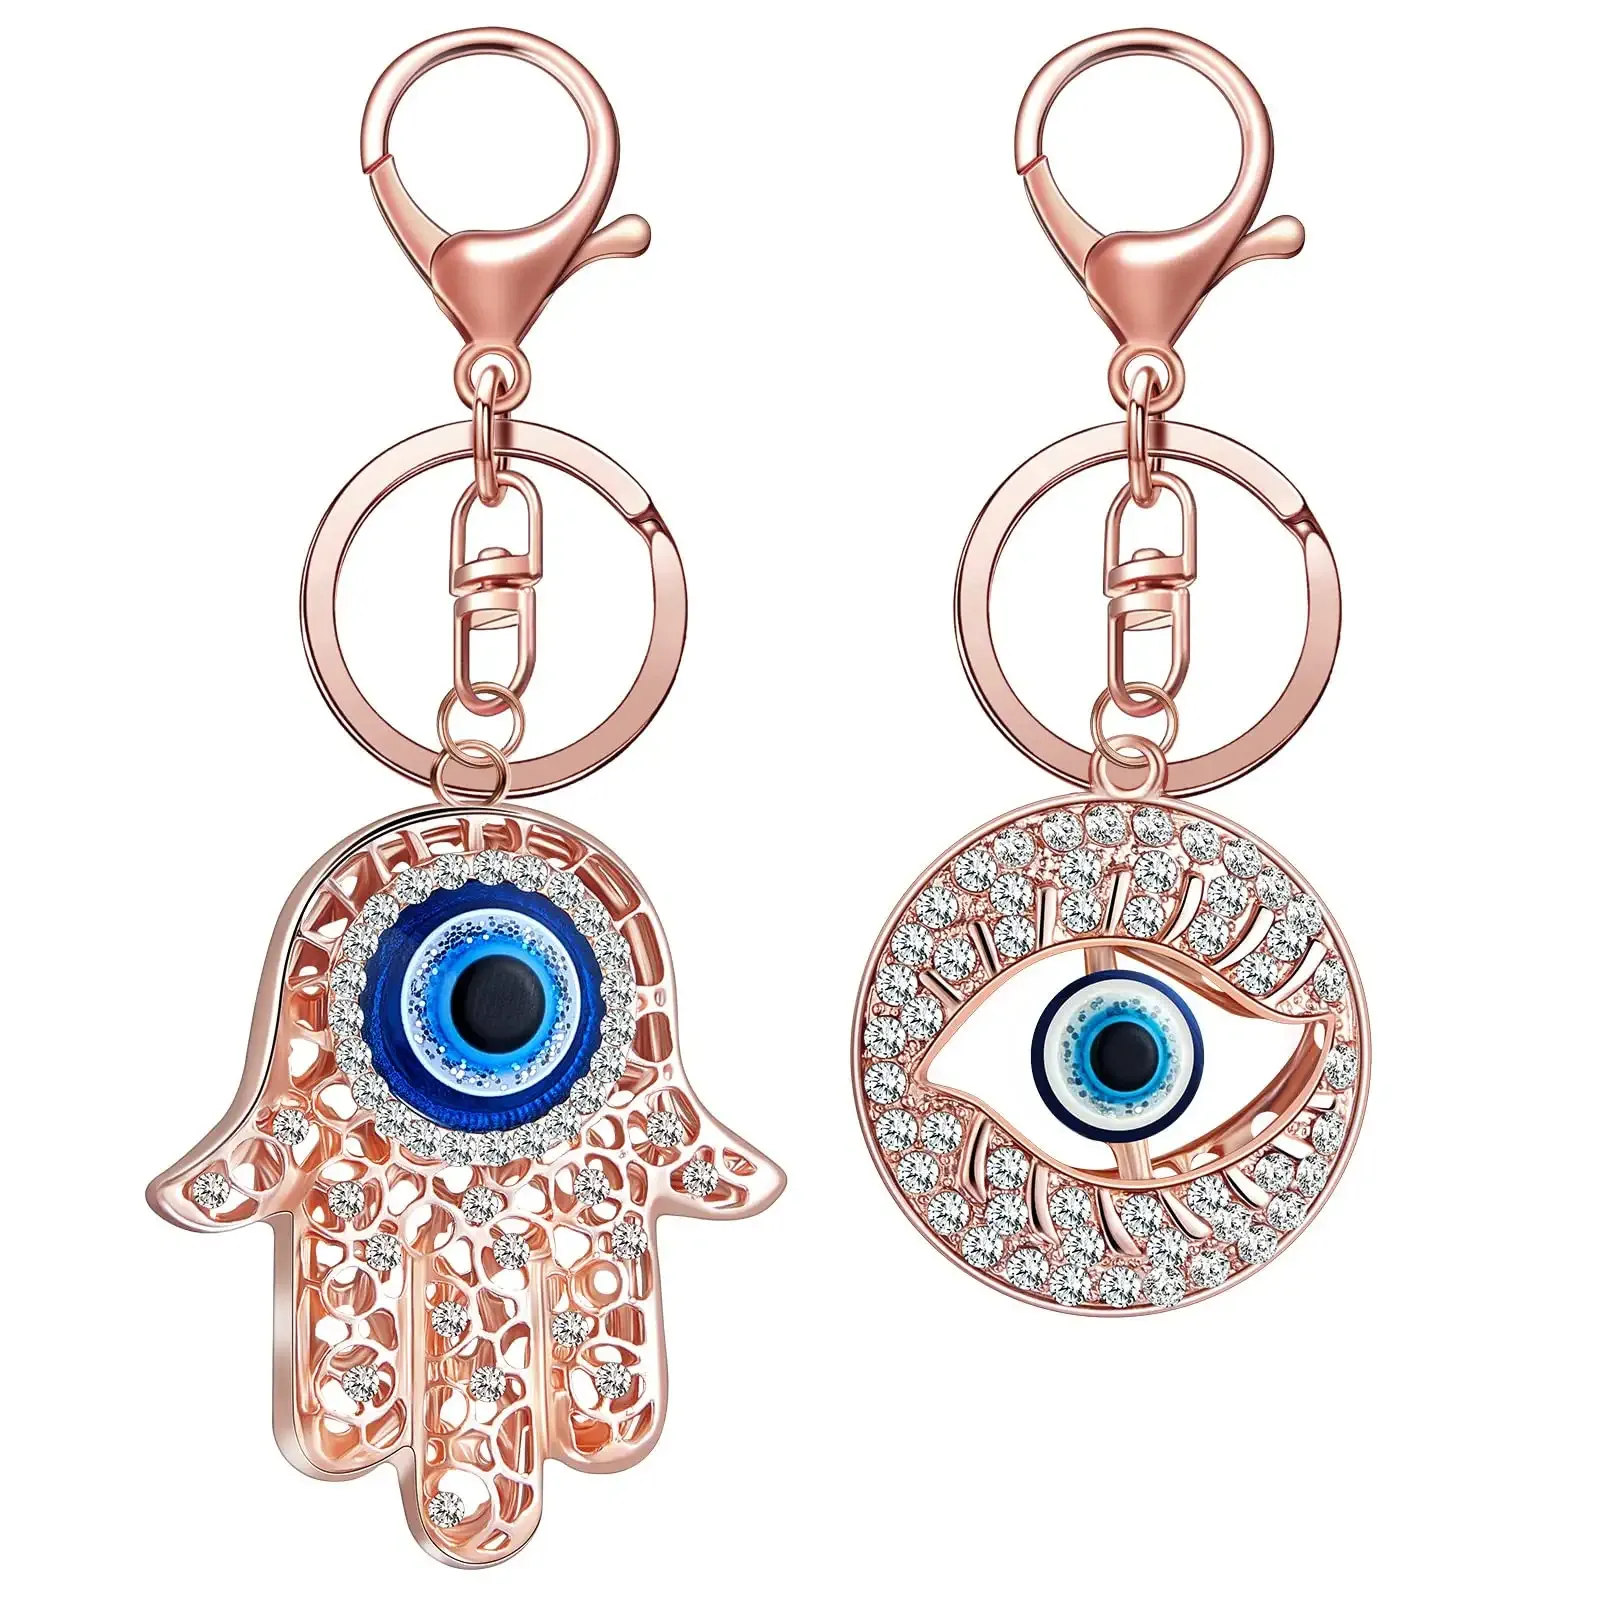 3ml evil eye keychain red for good luck keychain amulet charm for women or men keyring car decor turkish nazar protection keychain 5 blue standart